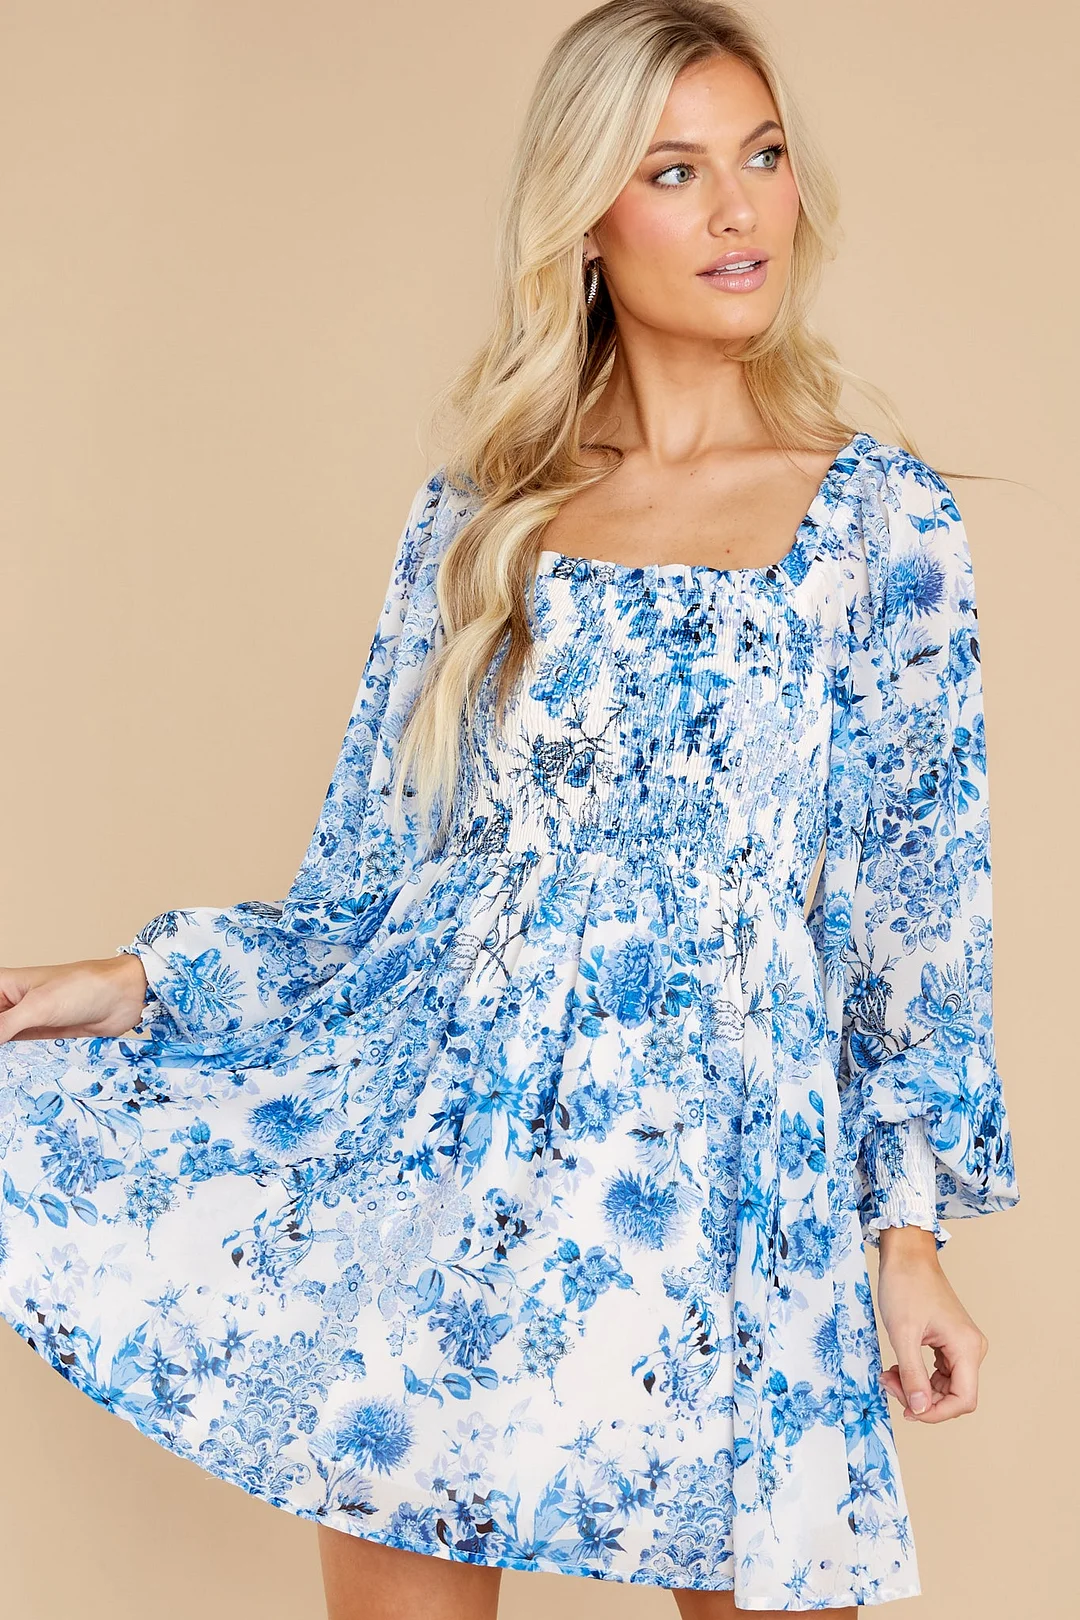 Fair Flower Blue Floral Print Dress